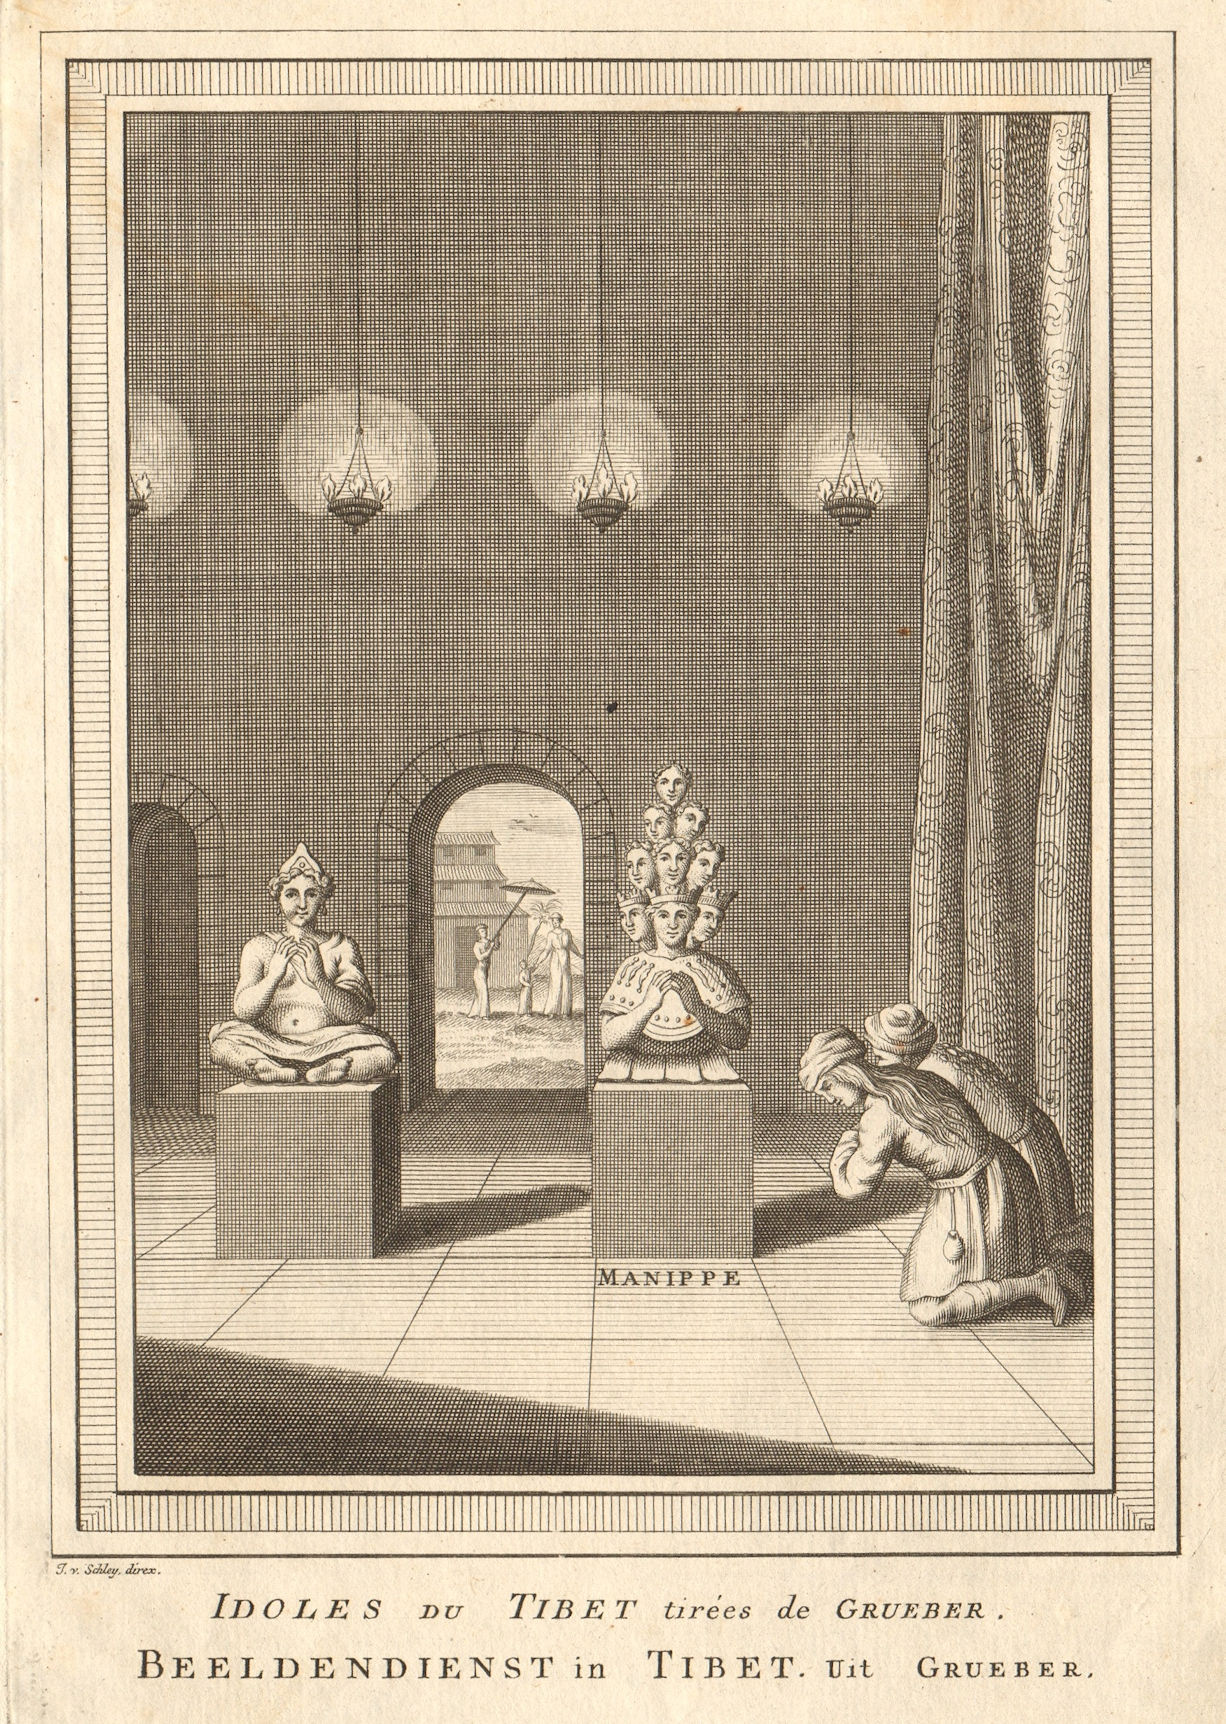 Associate Product 'Idoles du Thibet'. Tibetan idols, taken from Grueber. Manippe. SCHLEY 1749